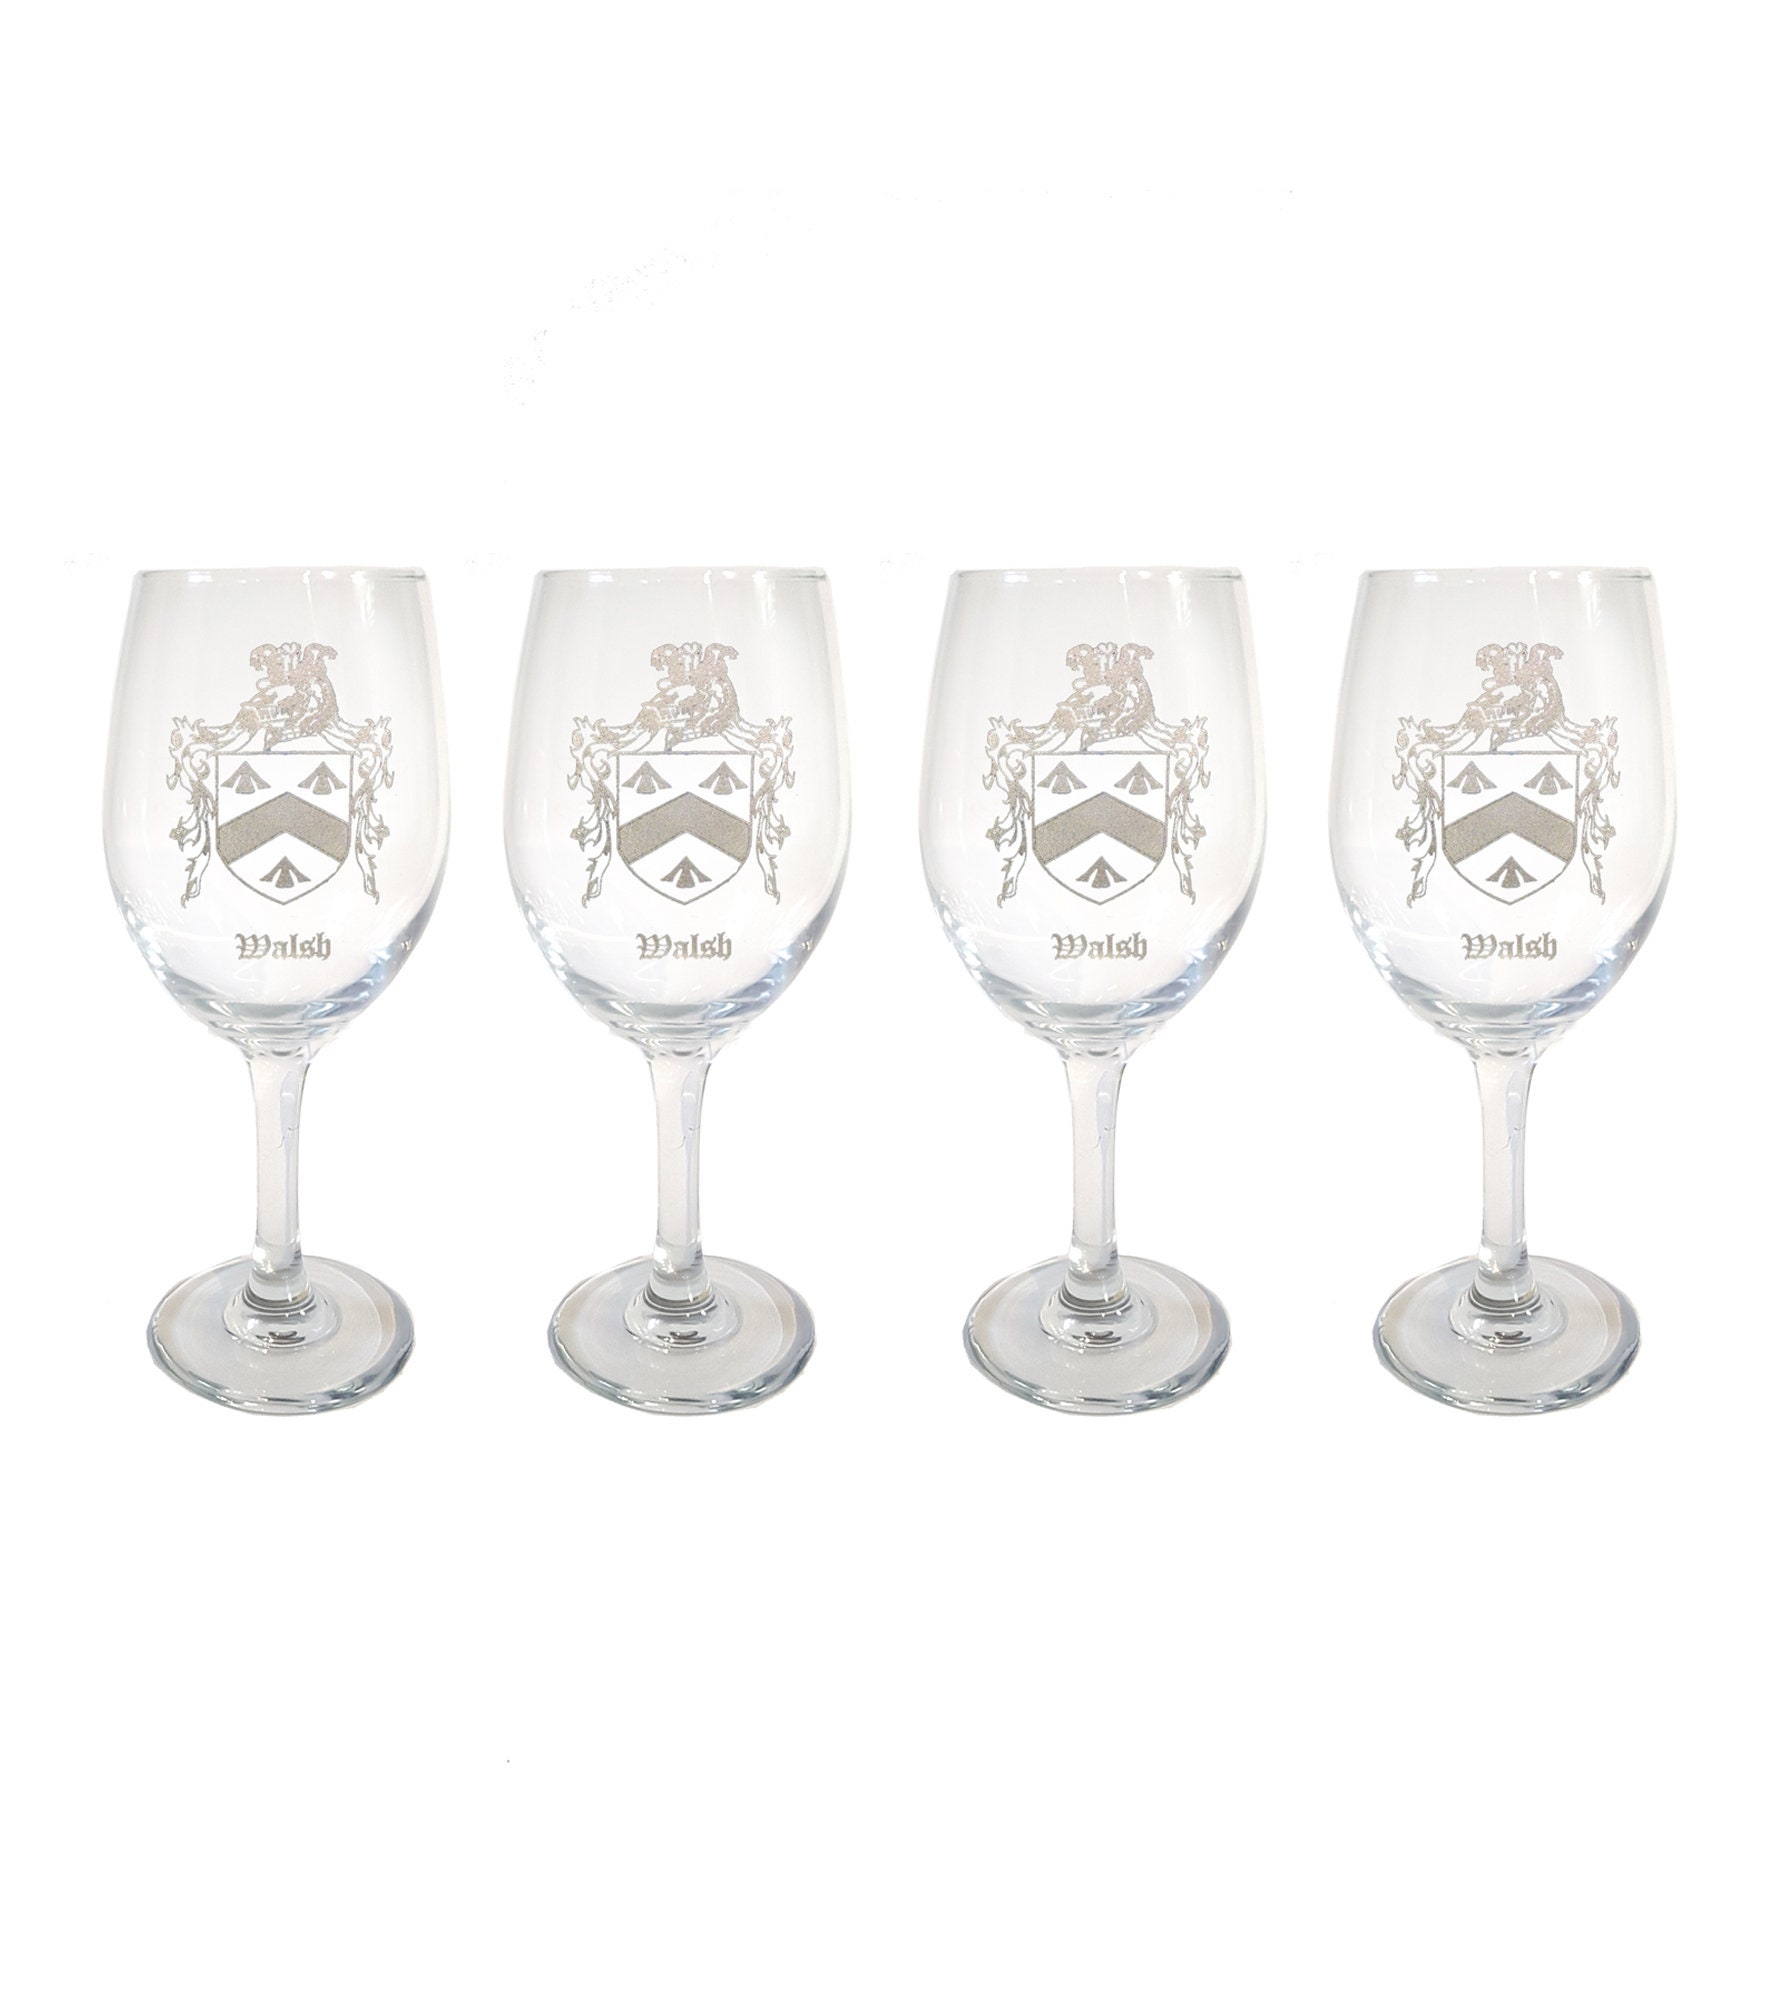 Sanzo Square Wine Glasses Set 4, Wine Glasses 15oz, Elegant Design White Wine Glasses, Red Wine Glasses Set for Home Bar Party (4pcs)